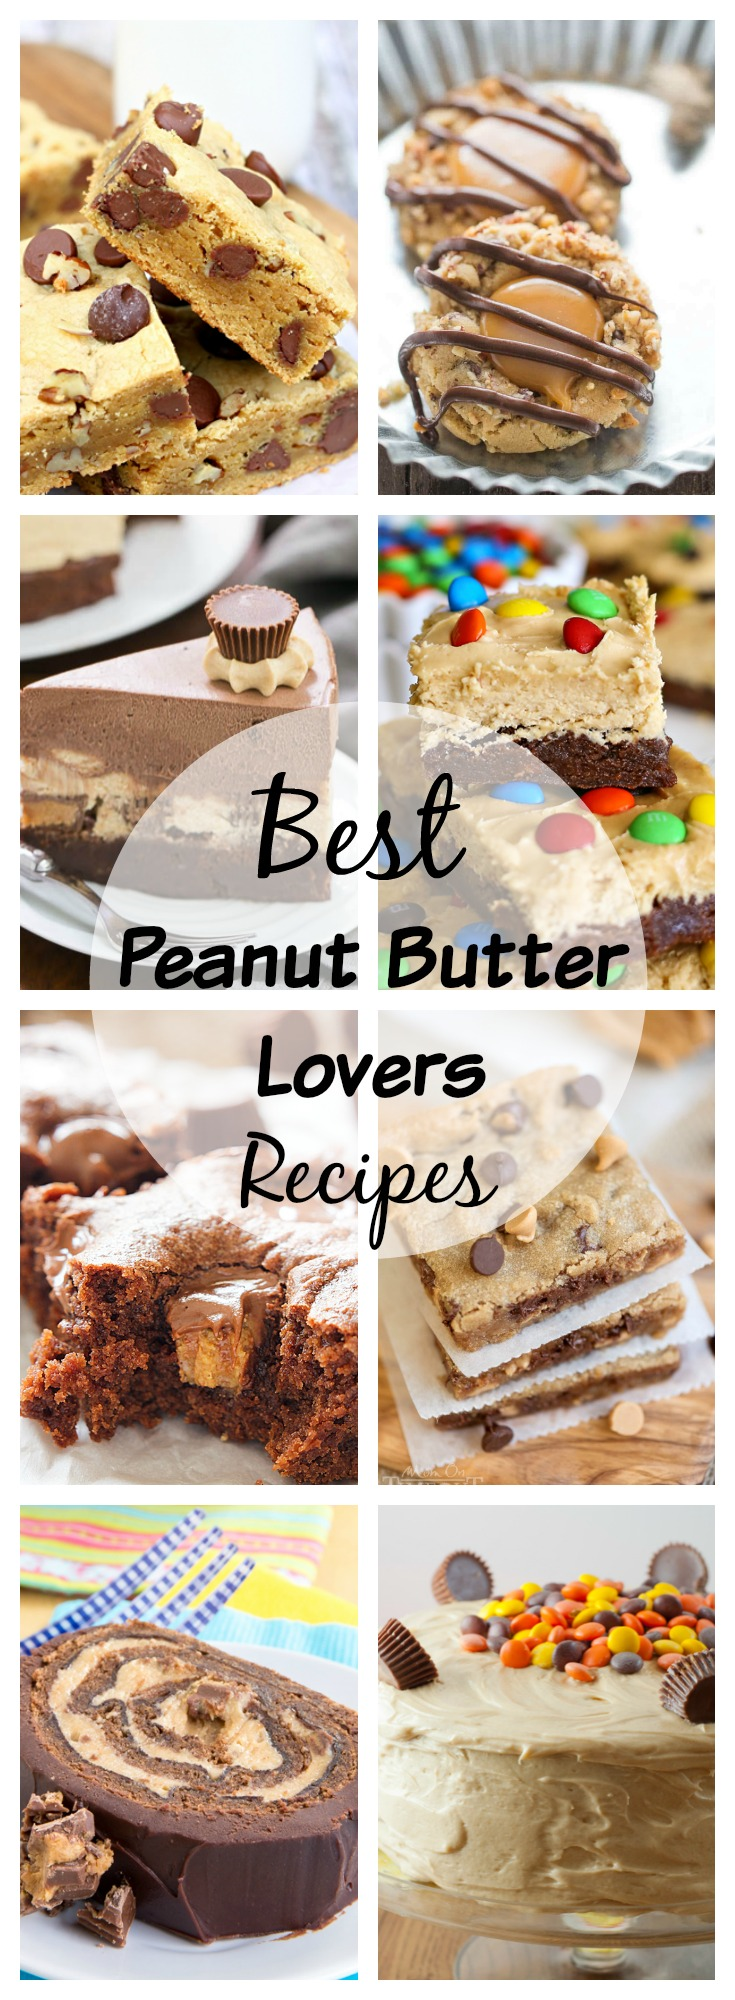 Peanut Butter Lovers Recipes